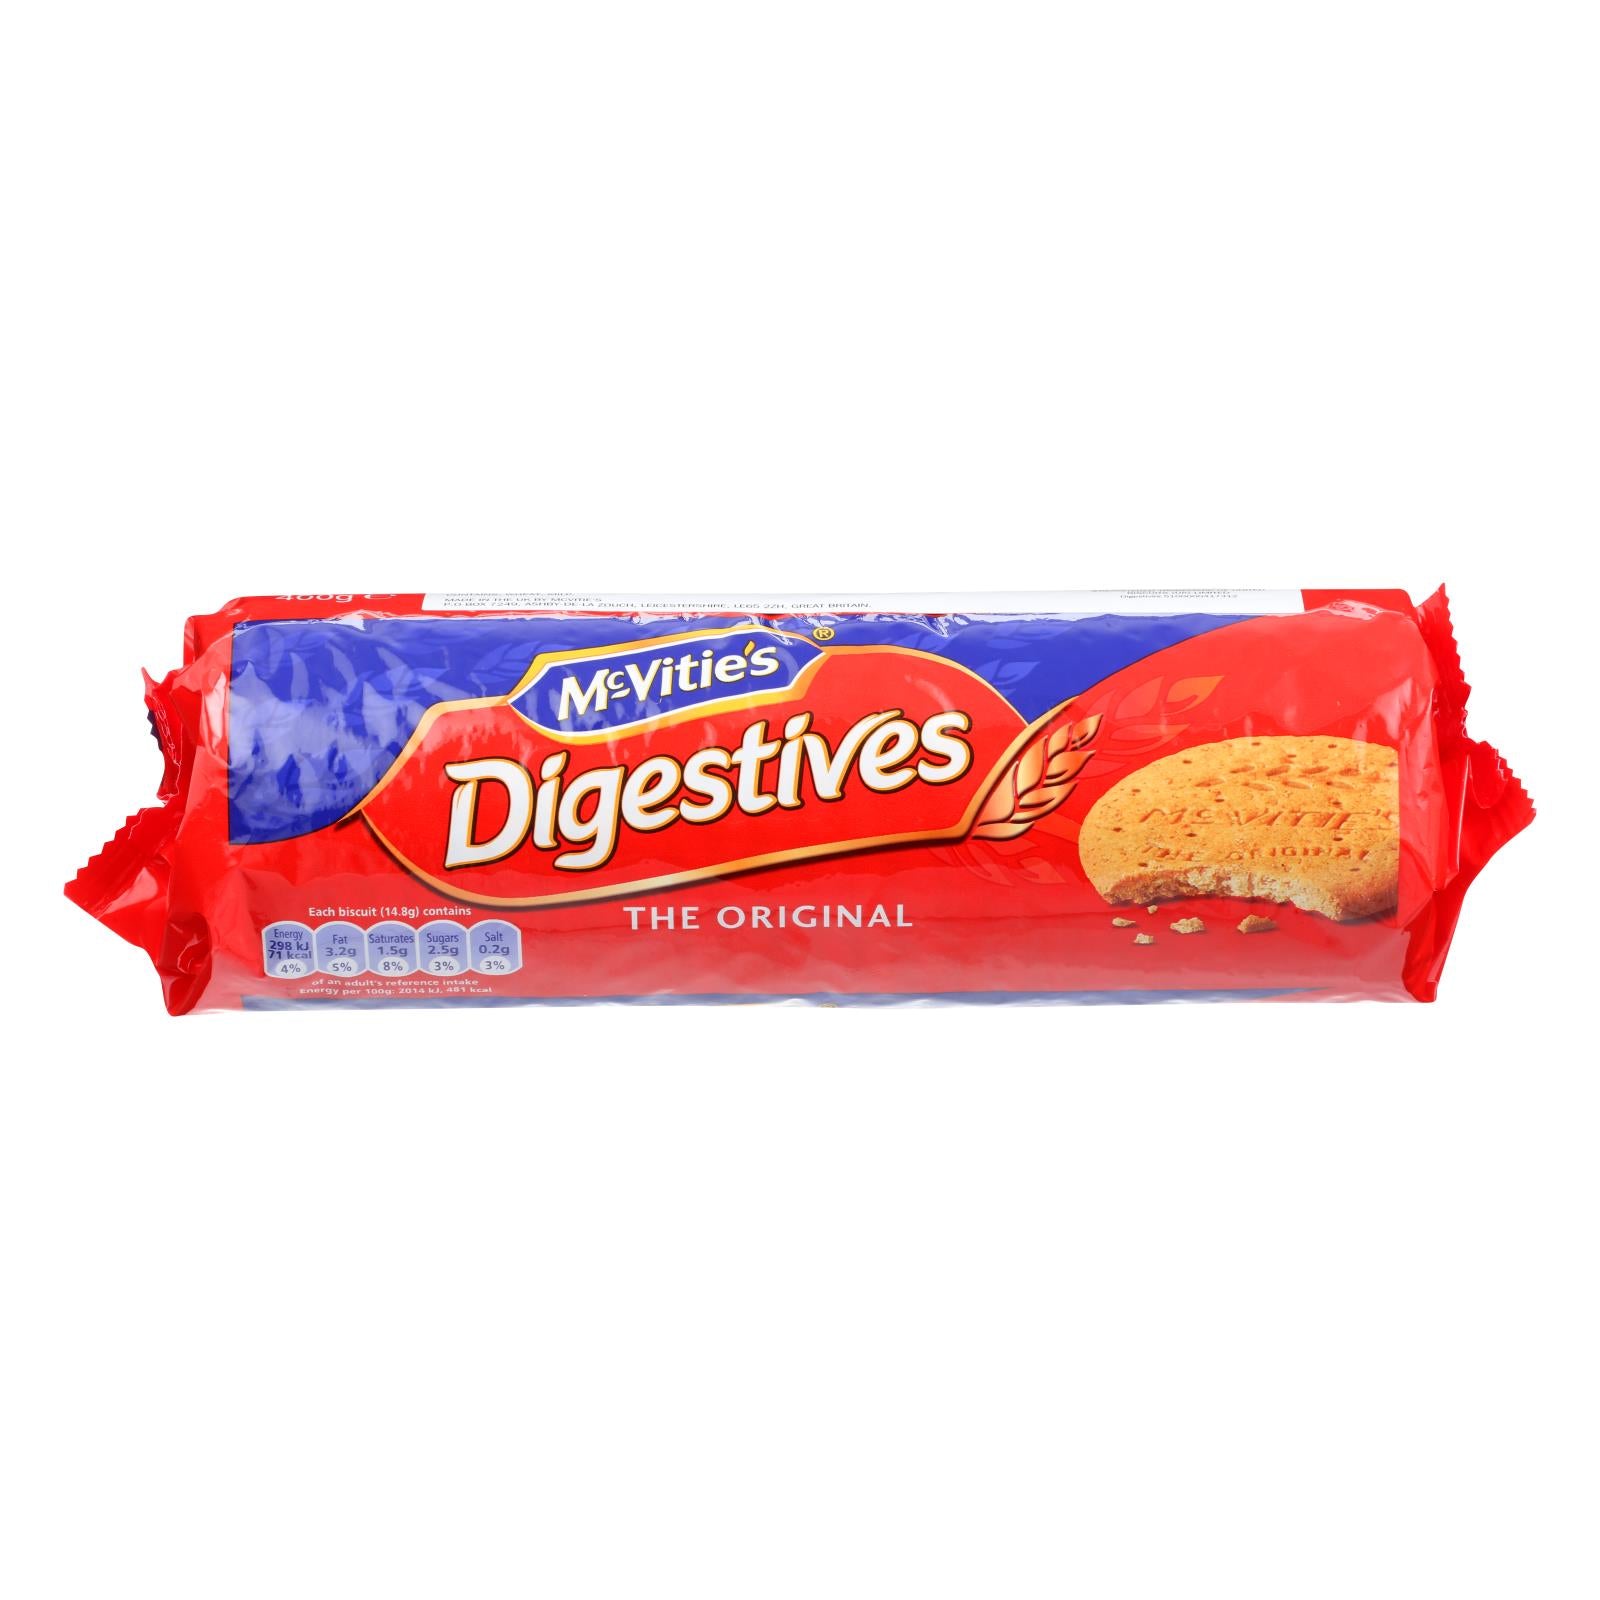 Mcvities, McVities Biscuits - Digestives - Large - 14.1 oz - carton de 12 (Paquet de 12)